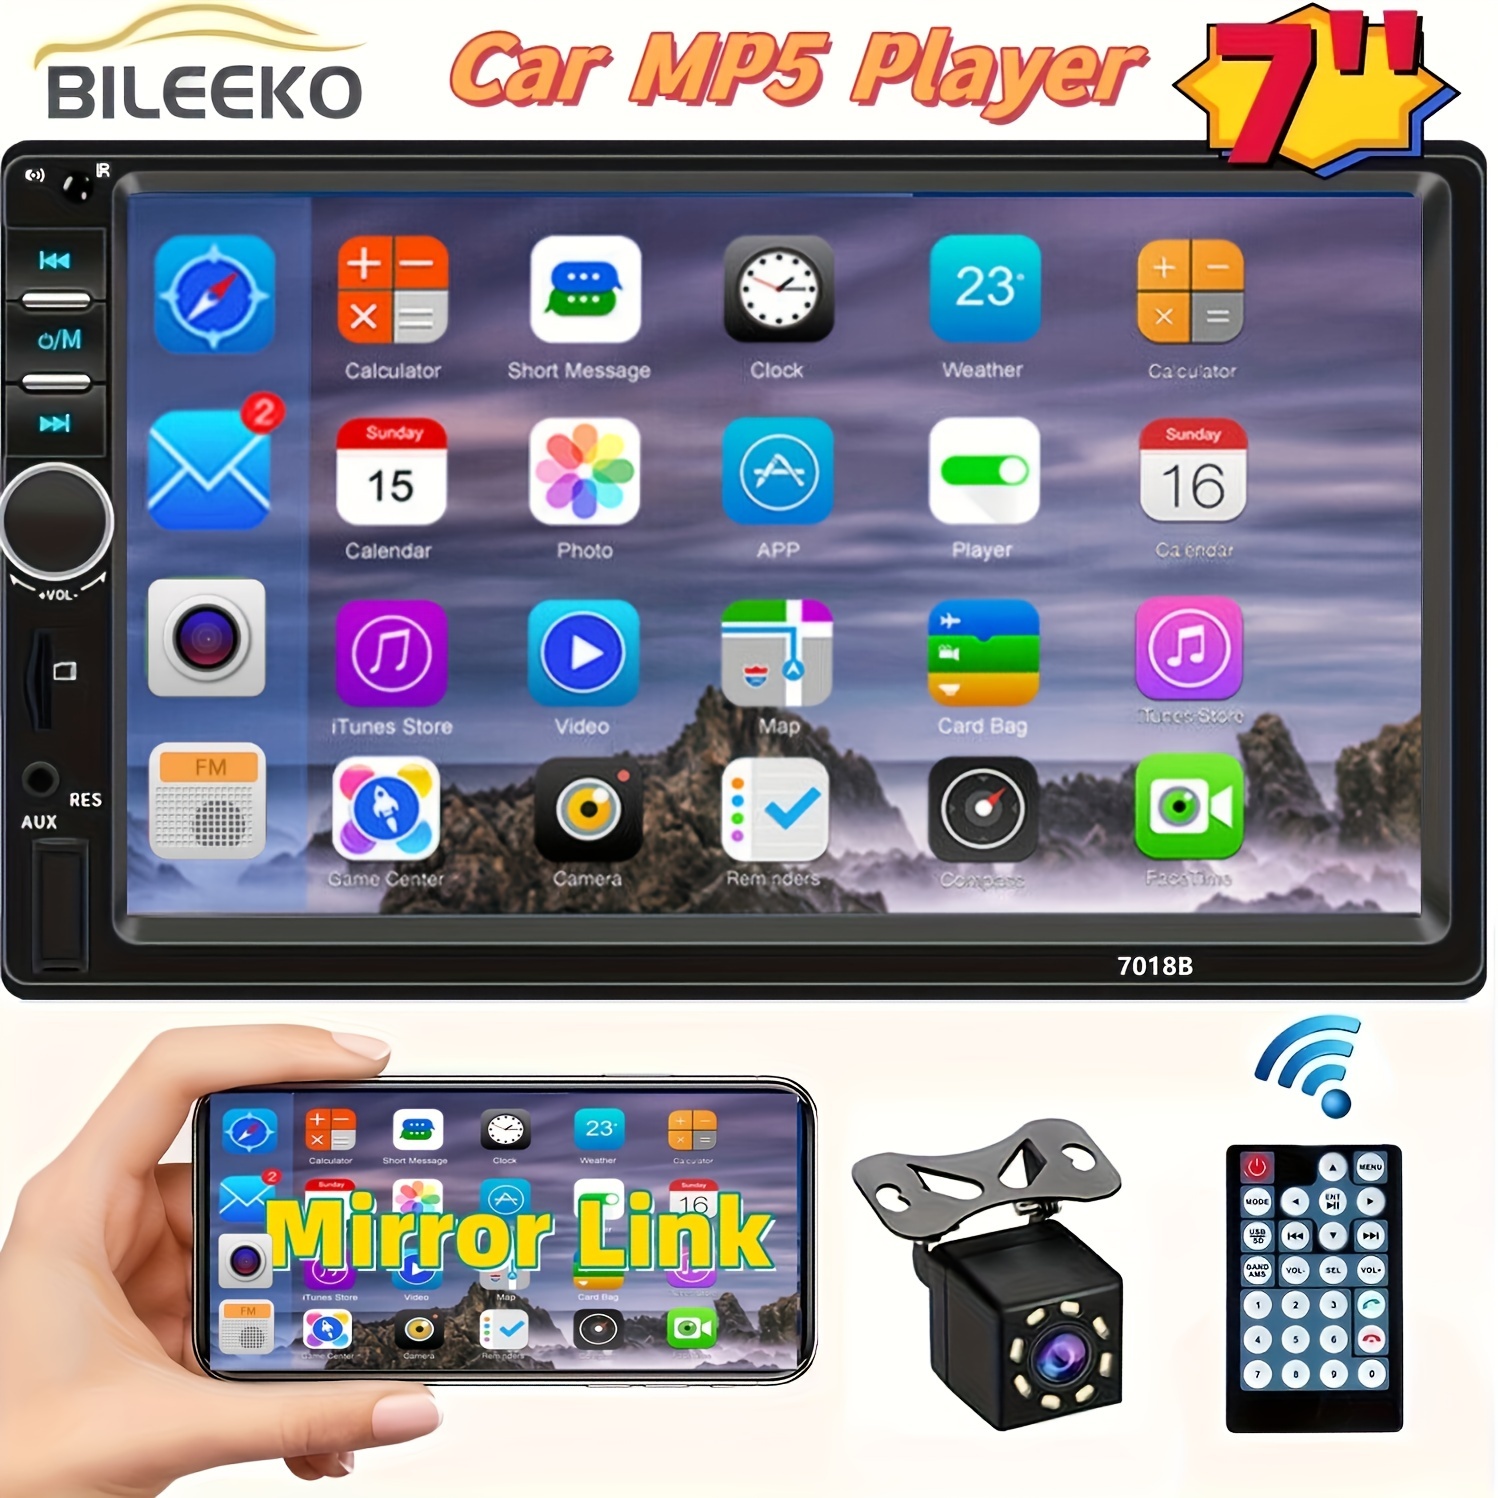 Android 8.1 Radio de coche retráctil GPS WiFi Autoradio 1 Din 7 '' pantalla  táctil coche multimedia reproductor MP5 Bluetooth Radio estéreo FM AUX USB